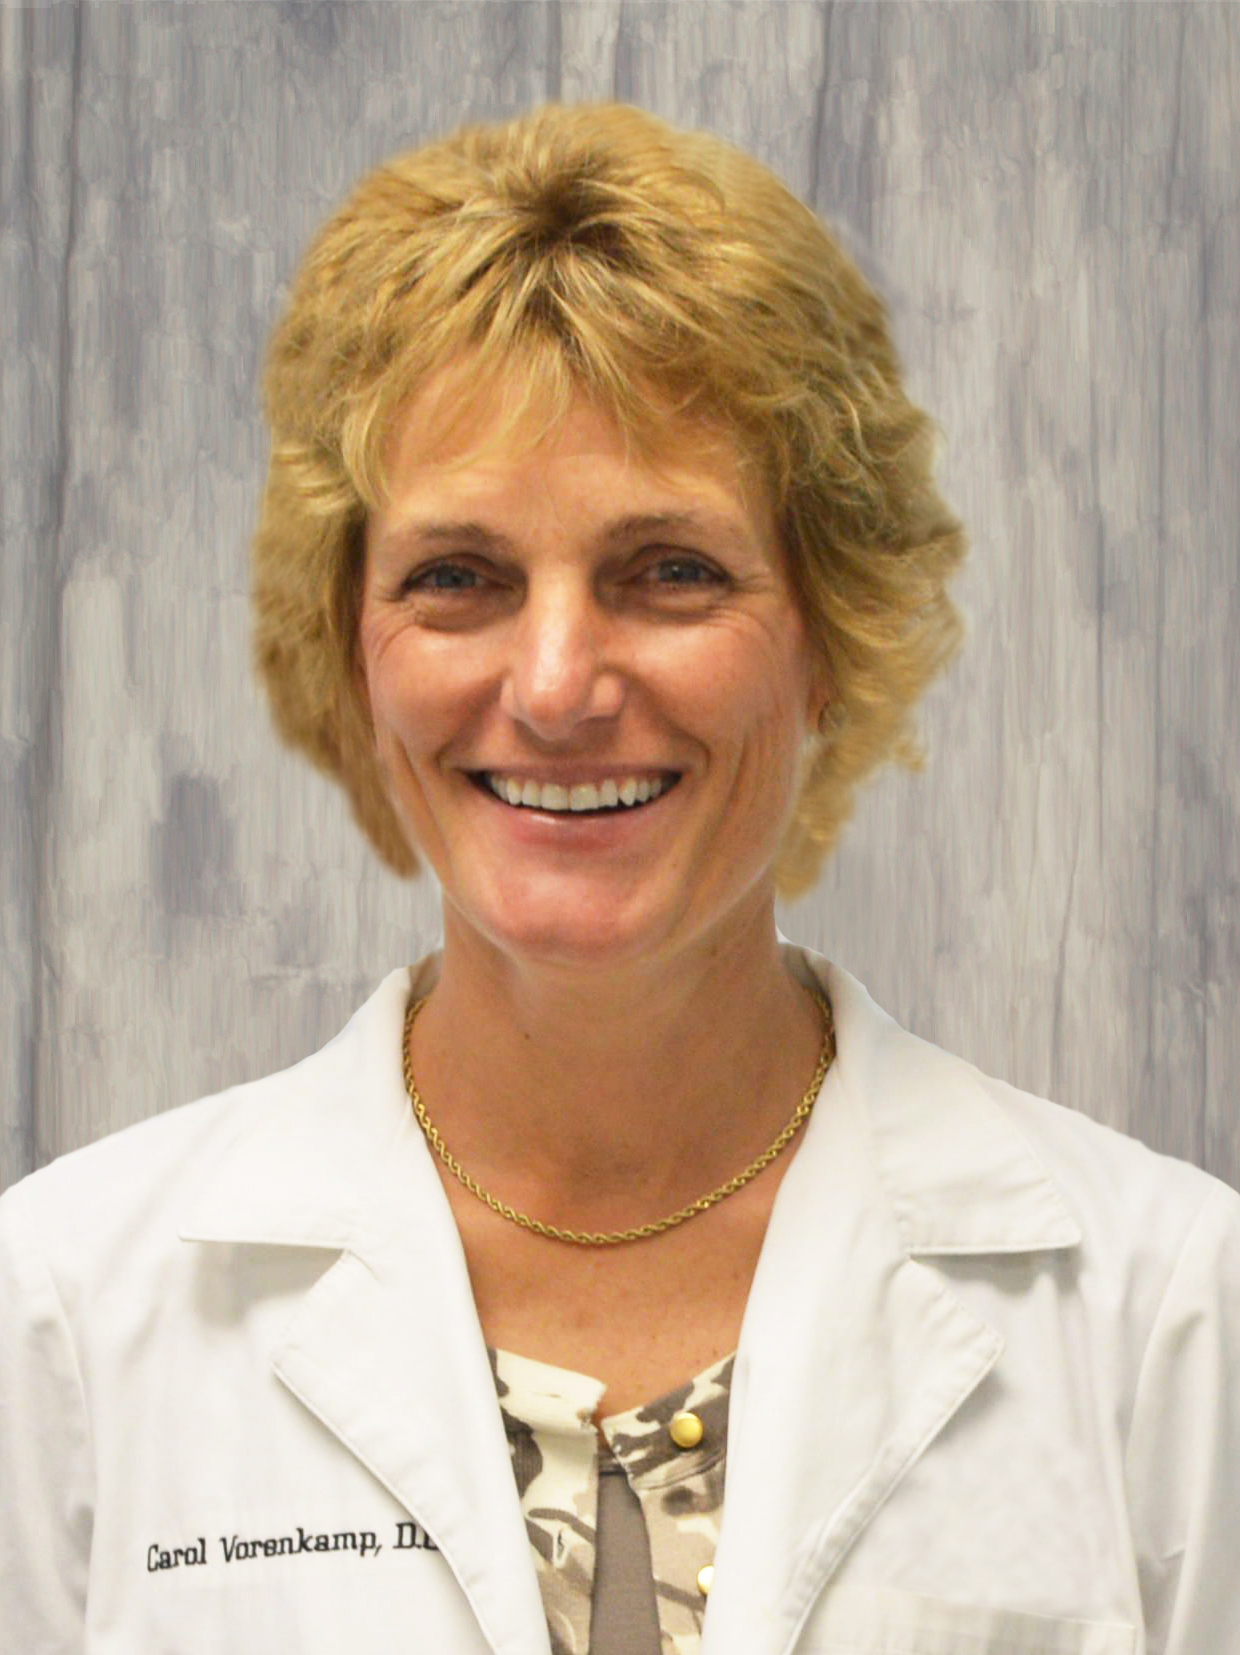 Carol Vorenkamp, DO - An Employed Provider of Memorial Healthcare